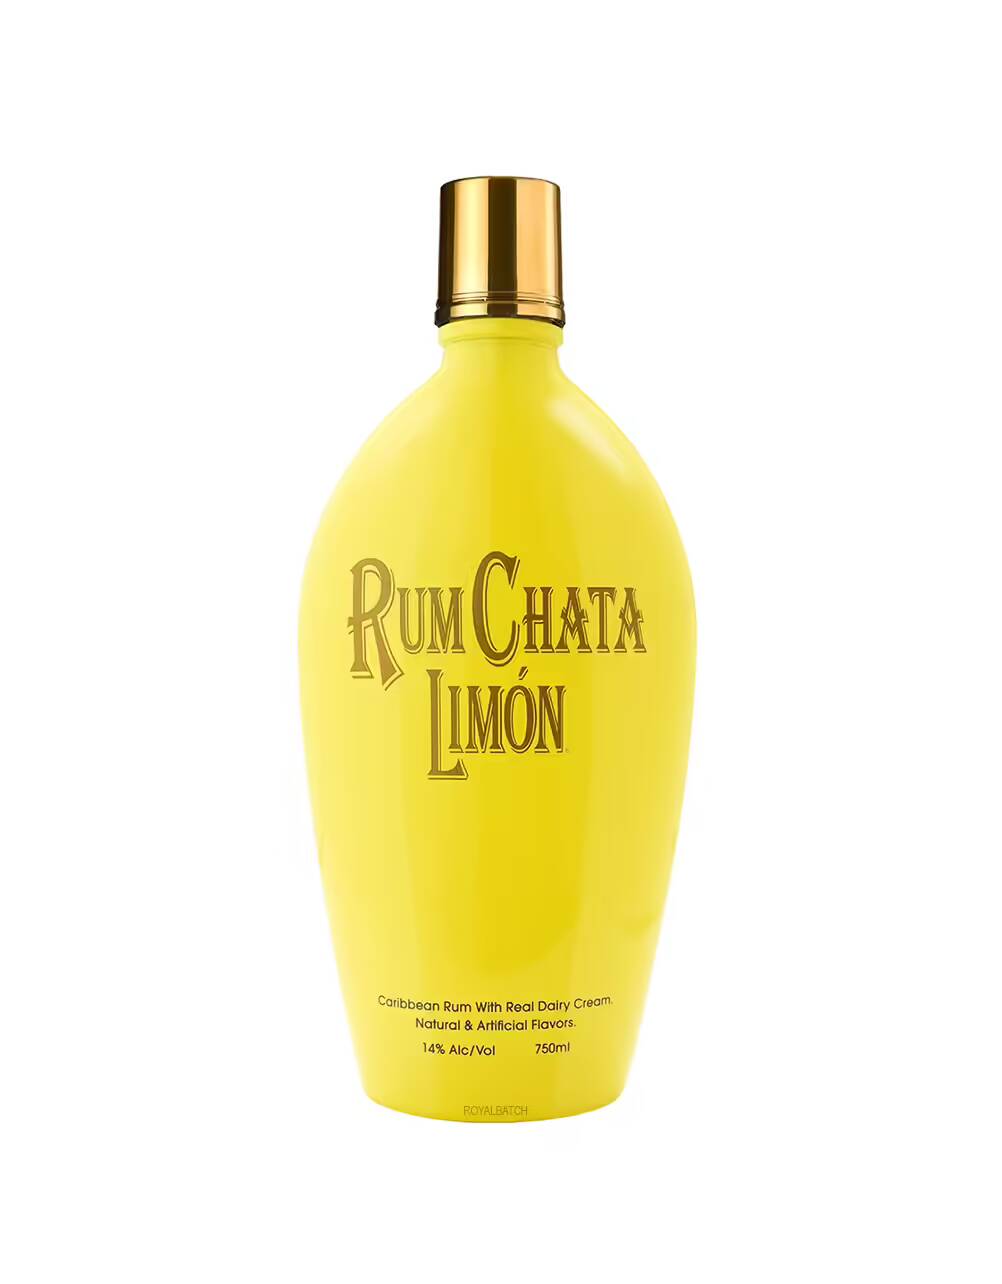 RumChata Limon Rum